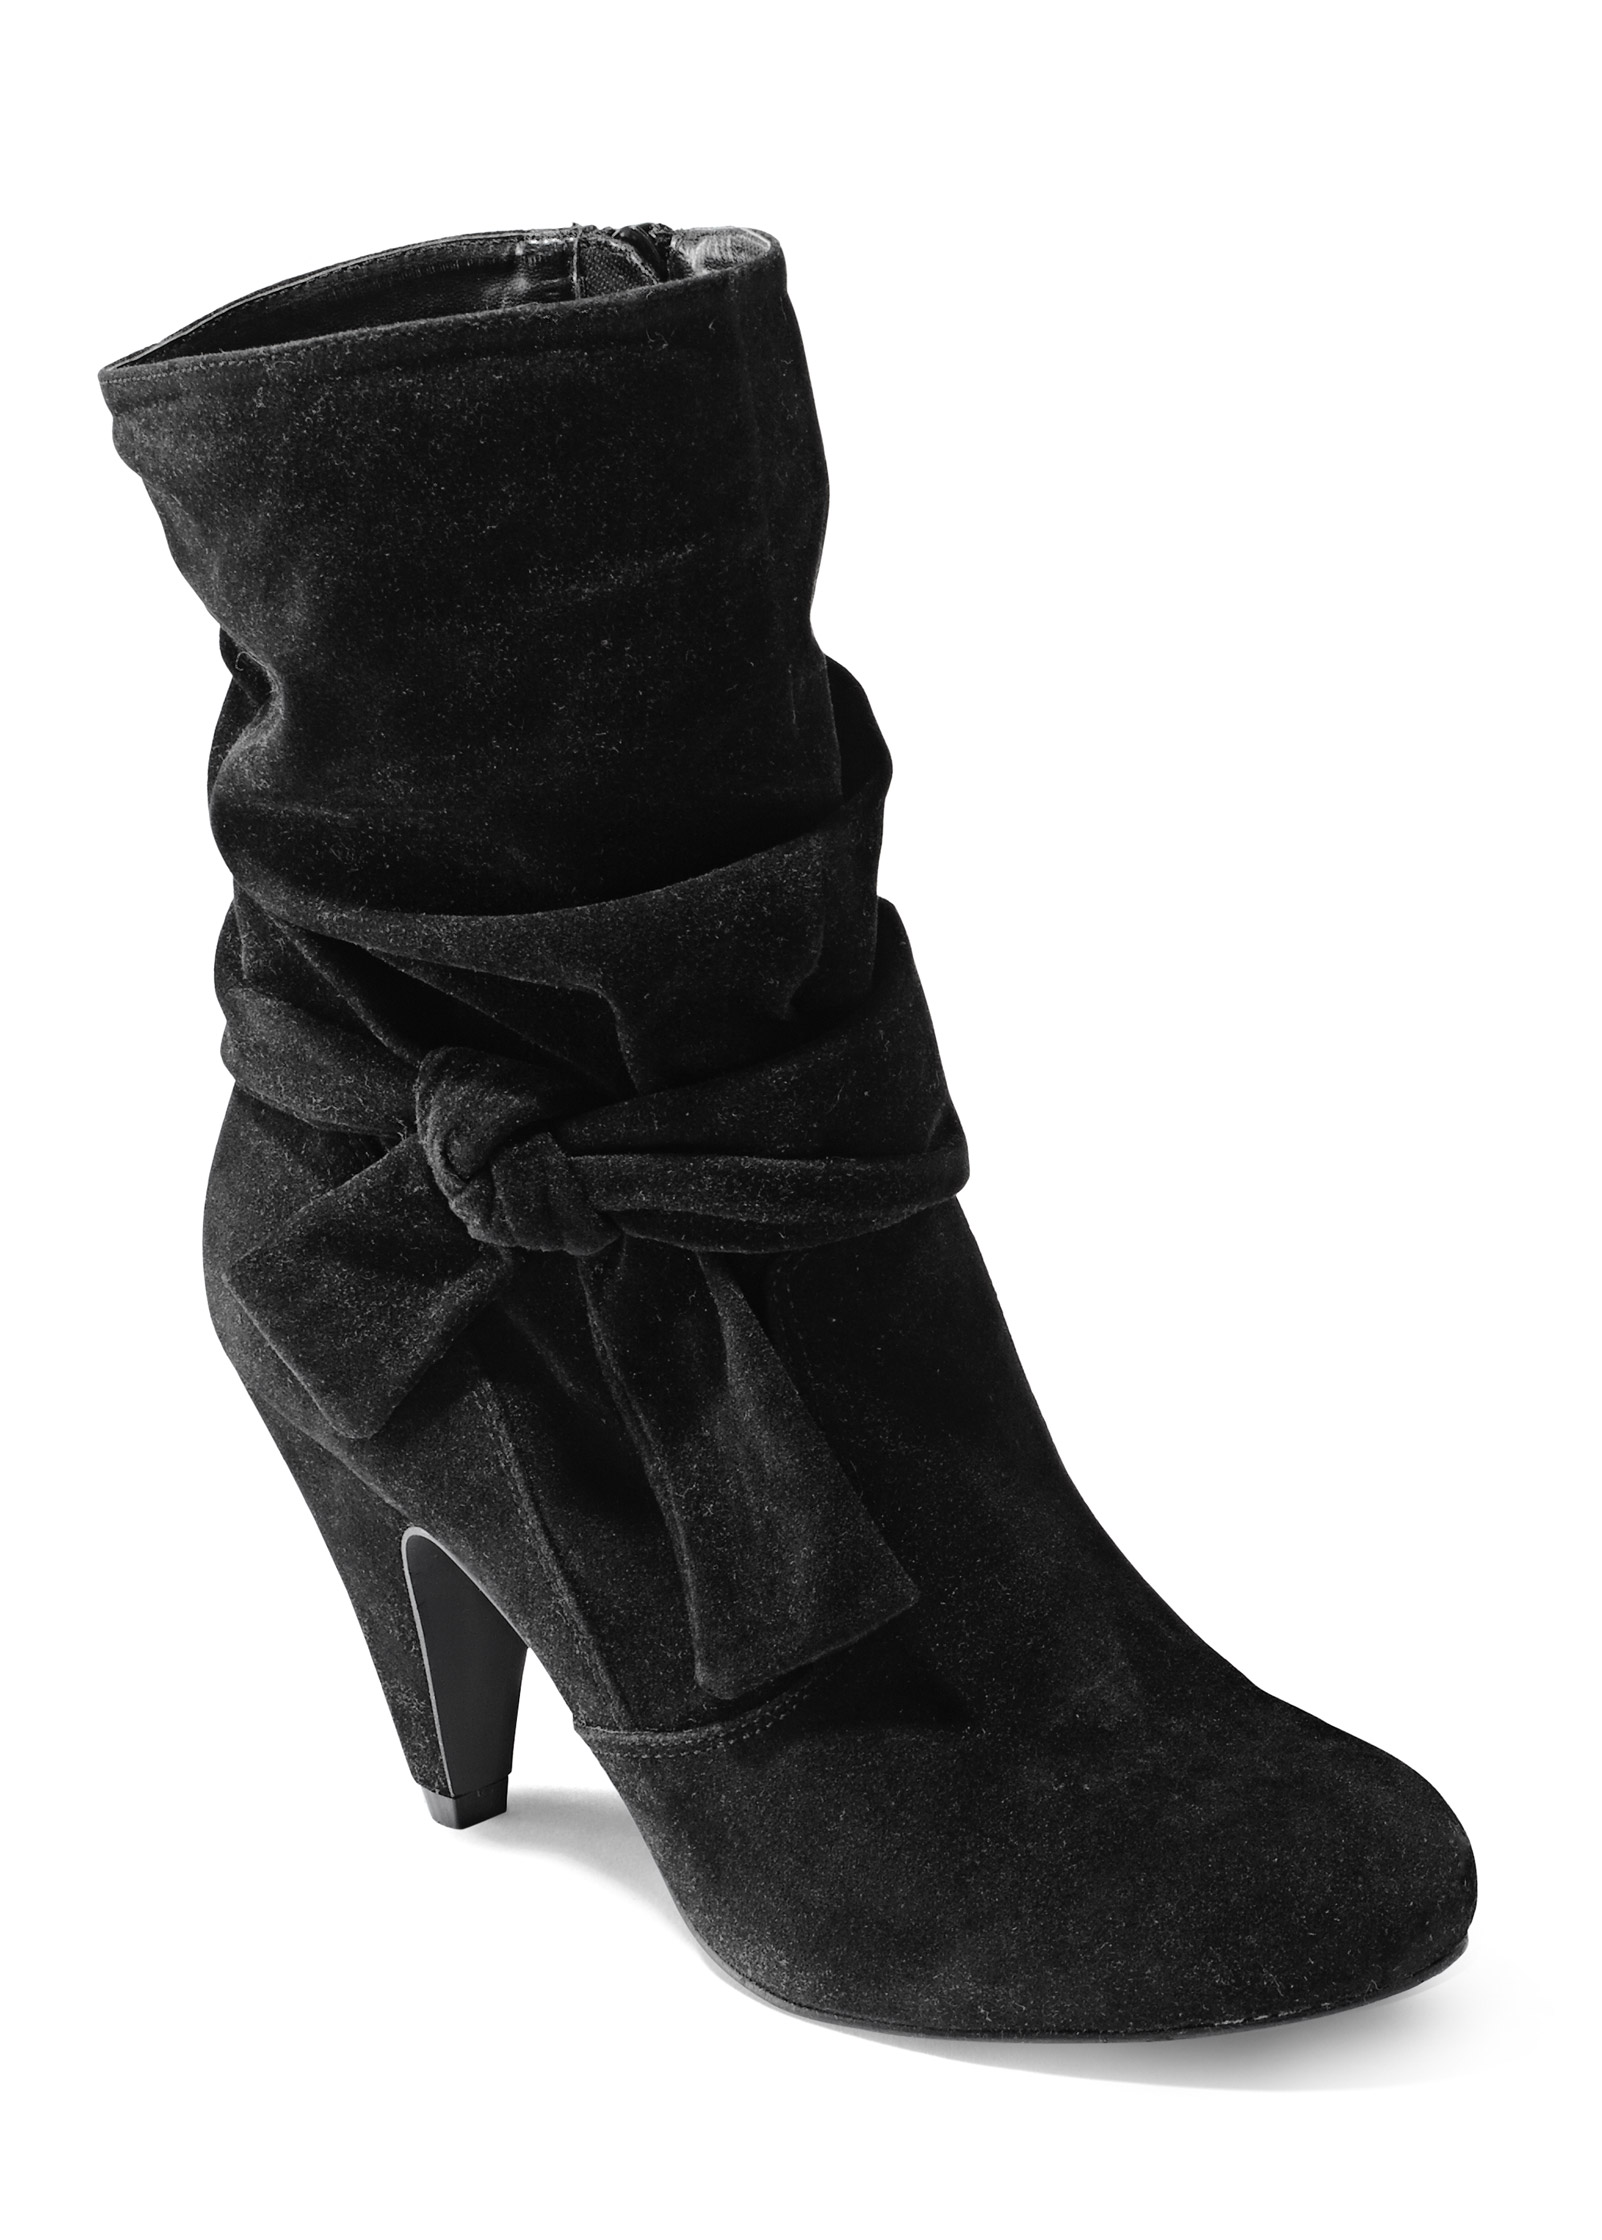 venus women's boots